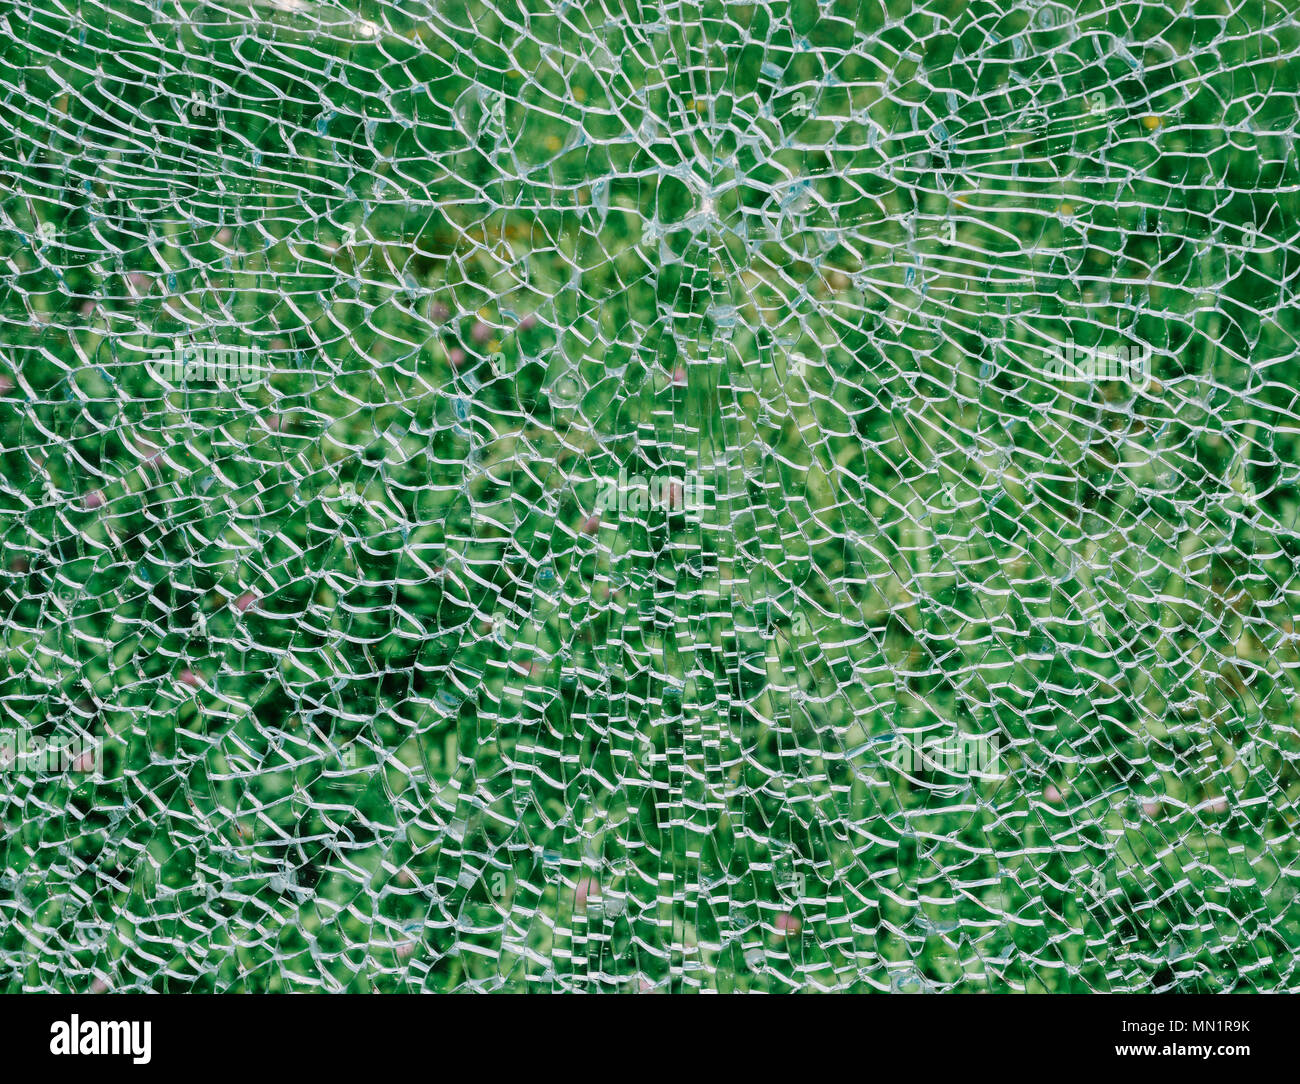 Broken windshield glass on a green background. Stock Photo